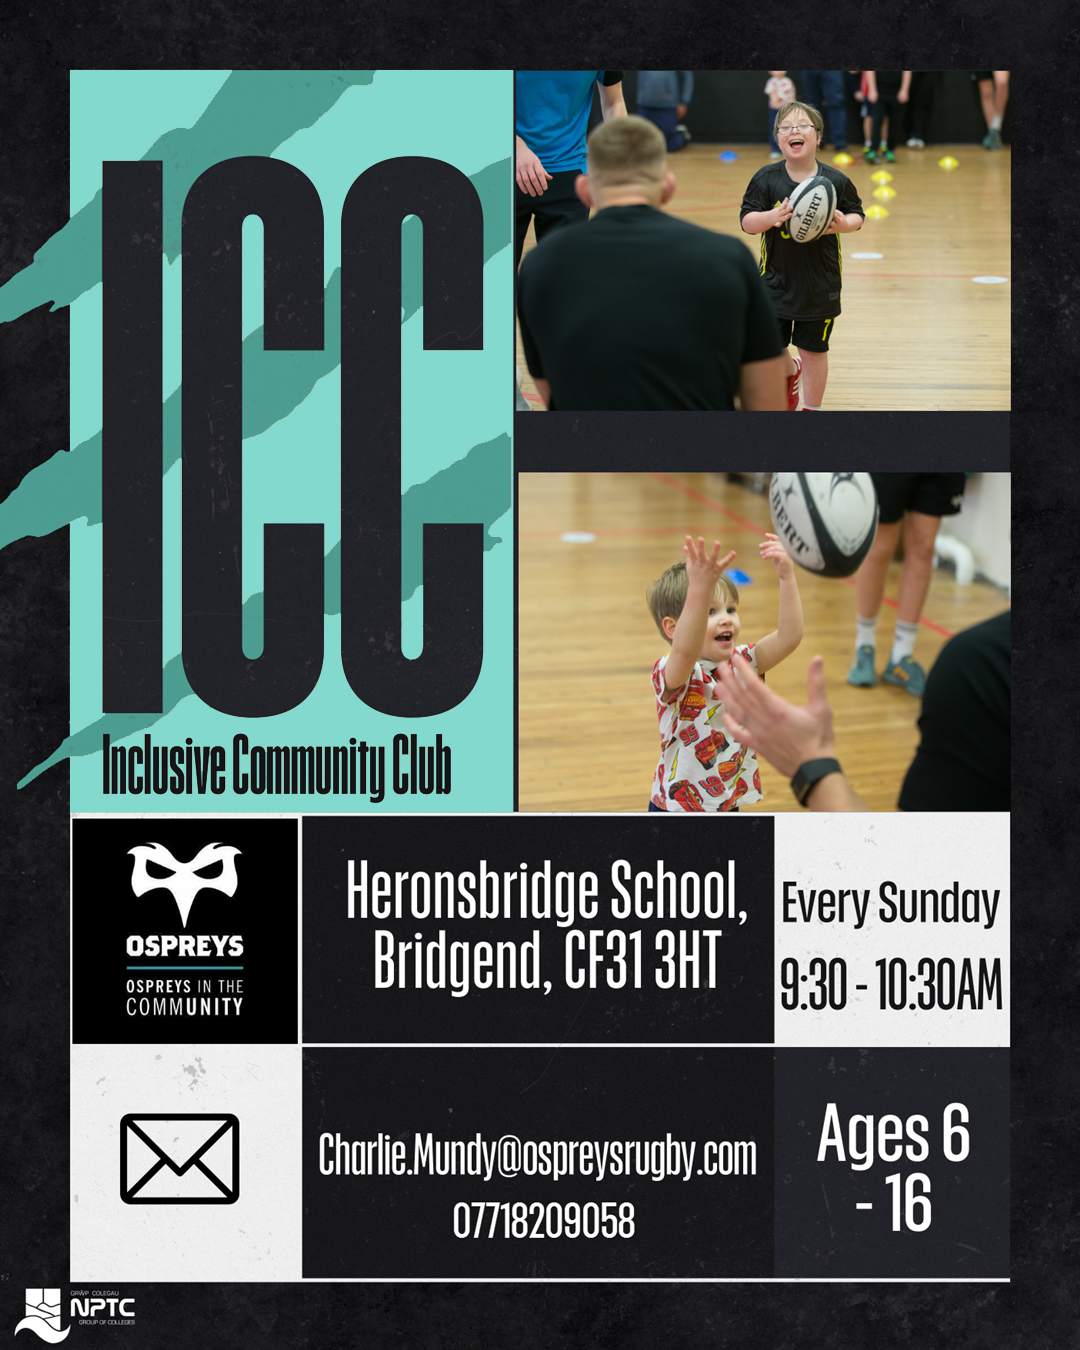 ICC at Heronsbridge School, Bridgend CF31 3HT. Ages 6-16. Ever Sunday 09:30-10:30am. Email charlie.mundy@ospreysrugby.com or call 07718209058